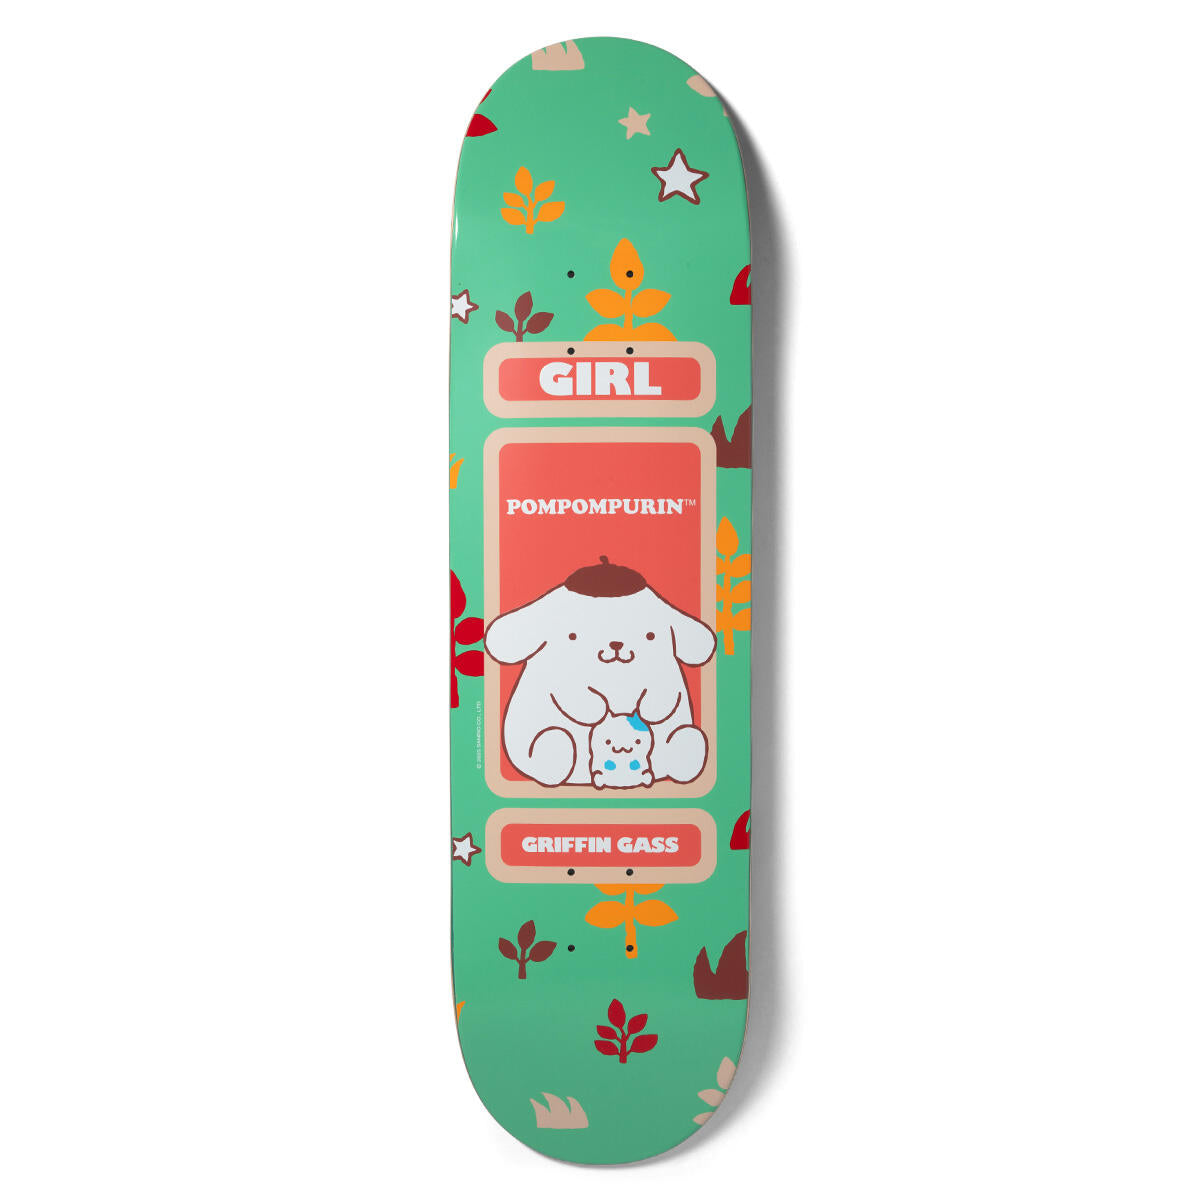 Girl Sanrio Gass Friends Pompompurin Skateboard Deck